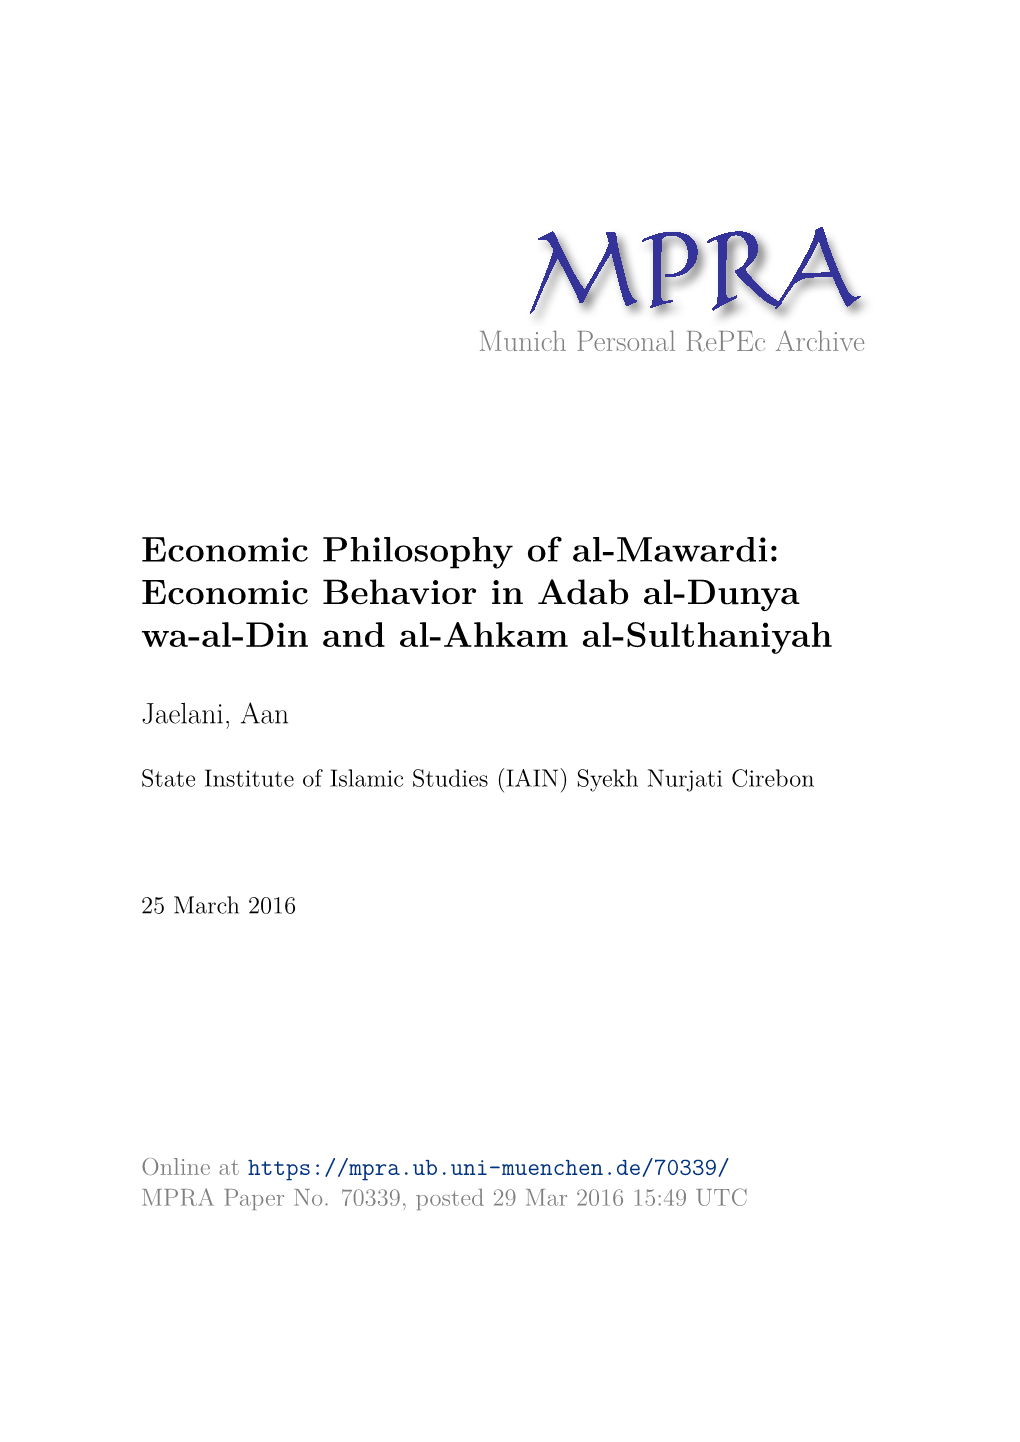 Economic Philosophy of Al-Mawardi: Economic Behavior in Adab Al-Dunya Wa-Al-Din and Al-Ahkam Al-Sulthaniyah